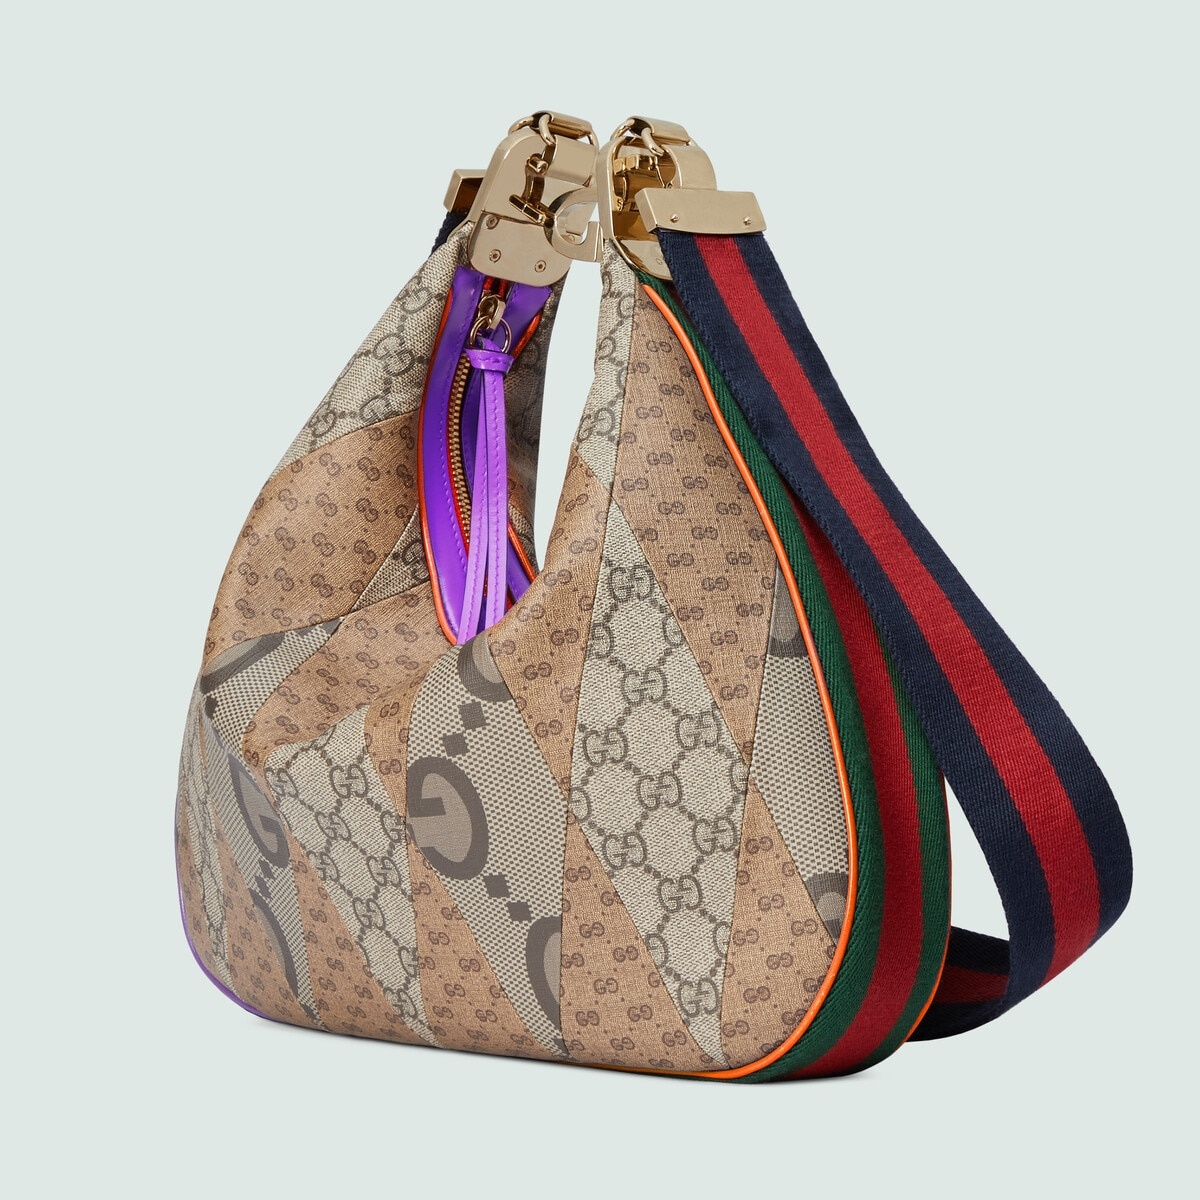 GUCCI Shoulder Bags Women, Large Gucci Attache bag White